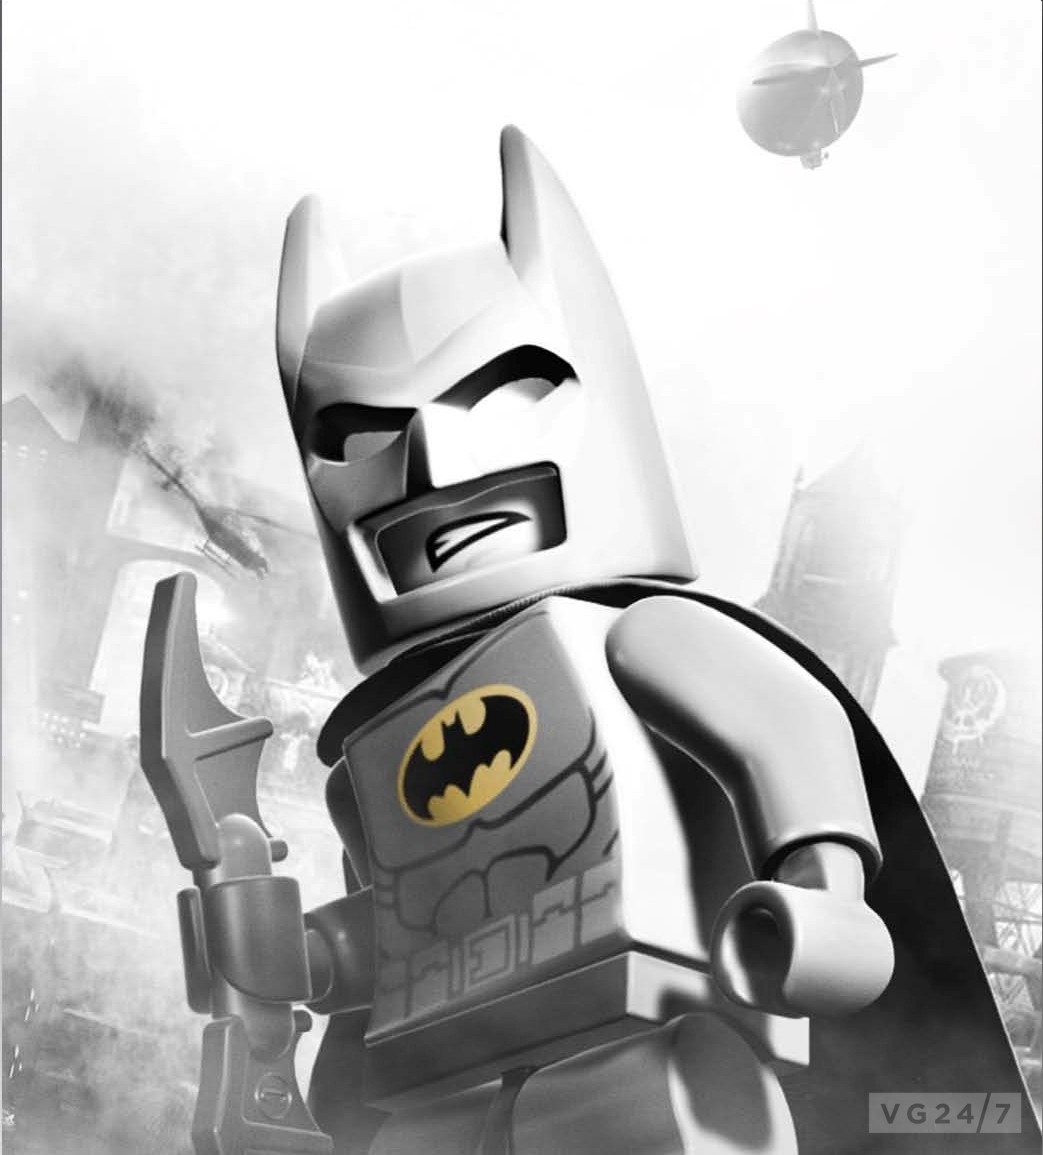 http://gam3rha.persiangig.com/image/lego-batman-2-dc-super-heroes-wii-27.jpg